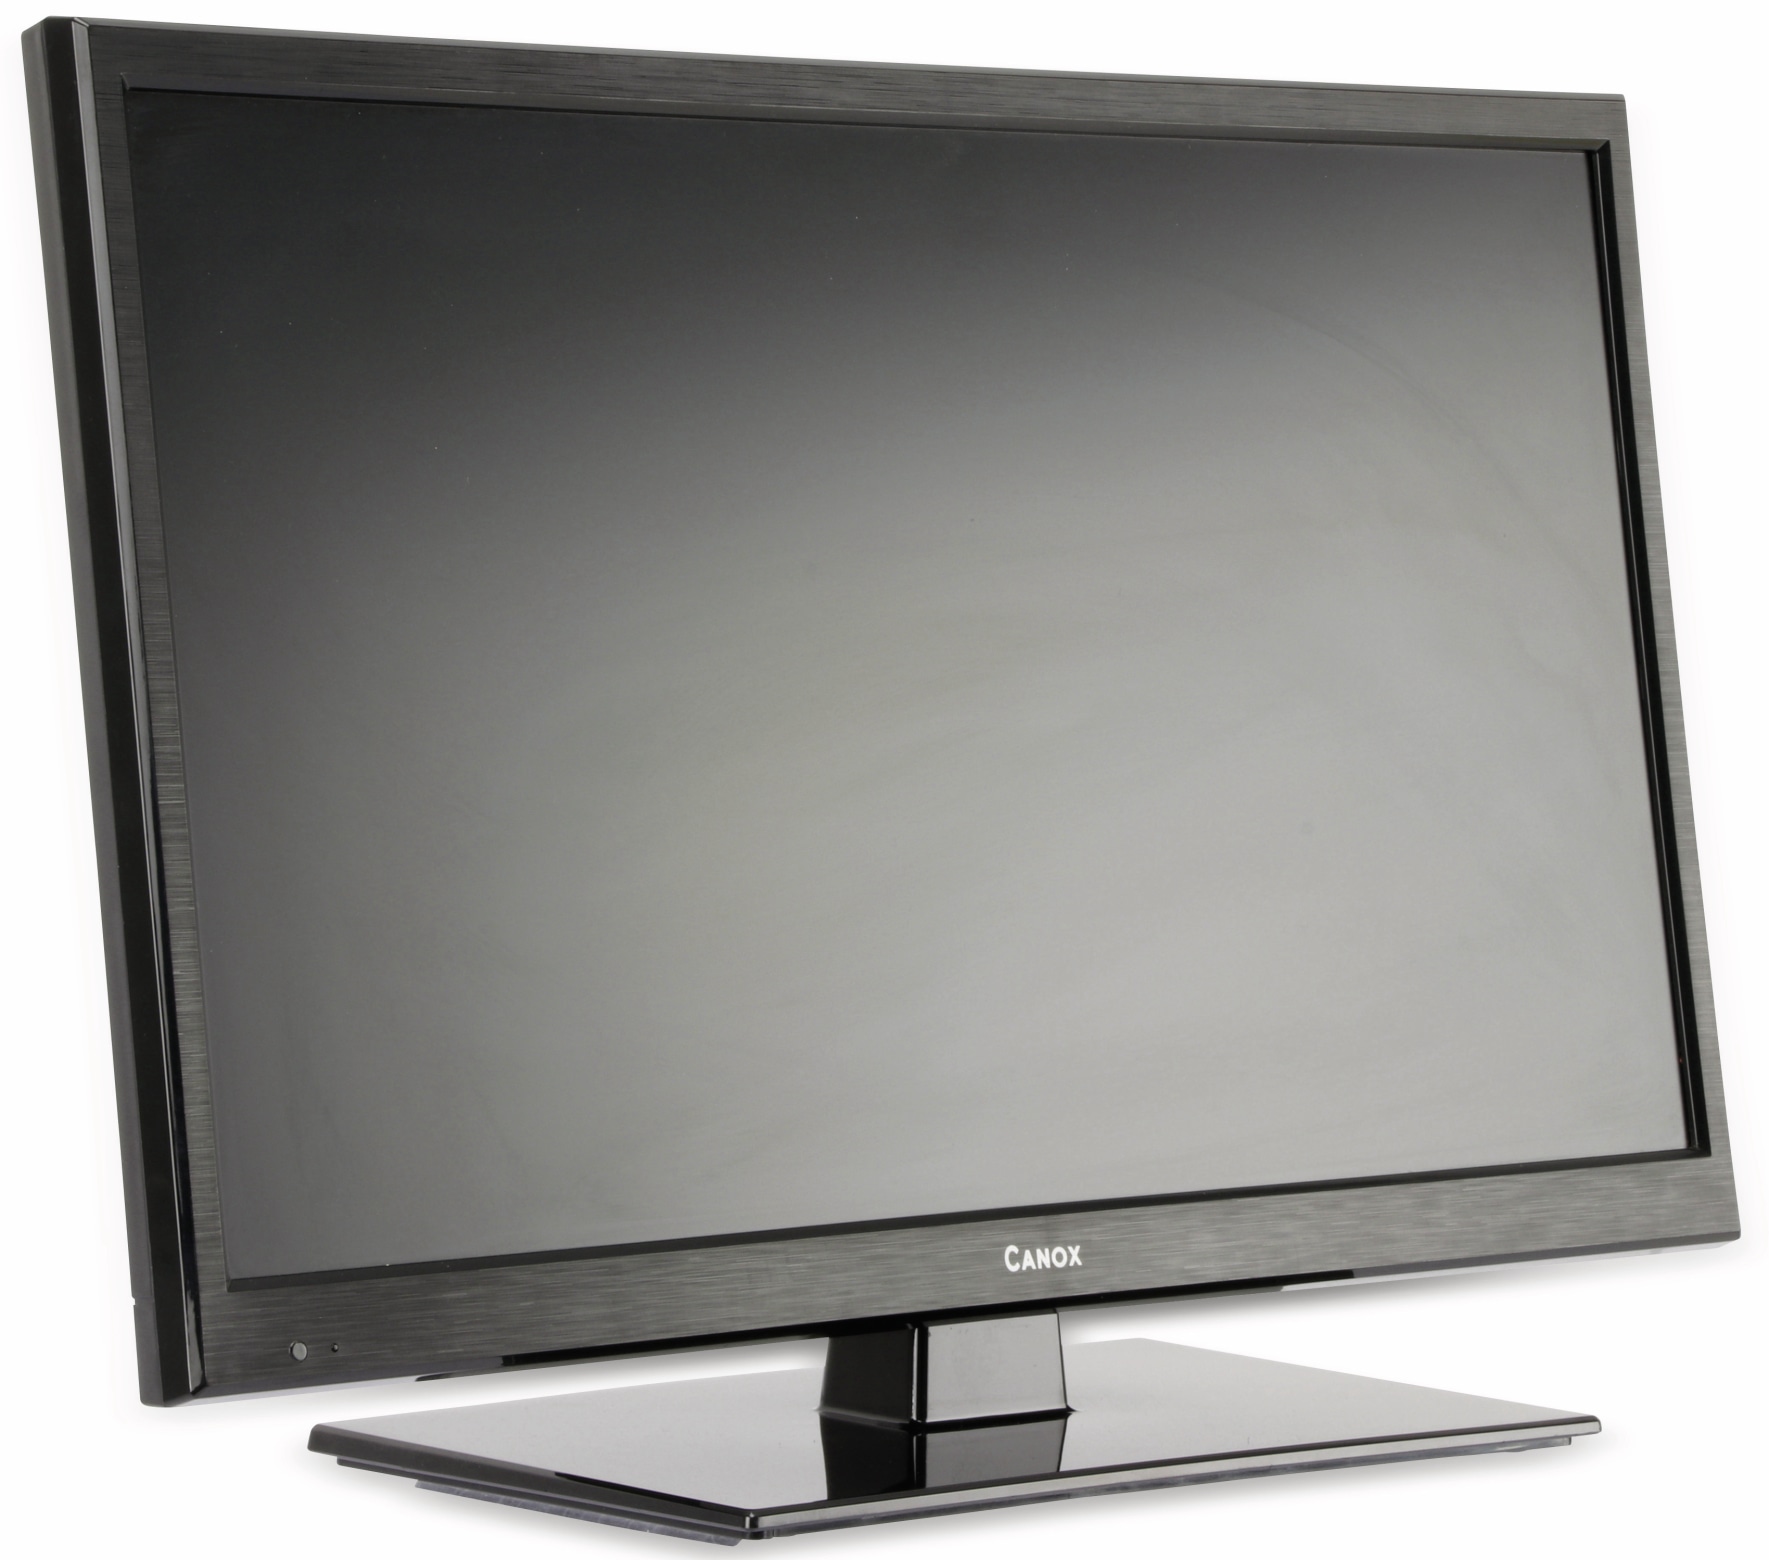 CANOX 21,5" LCD-TV, 2151KL, 54 cm,Full Hd, 1080p, B-Ware